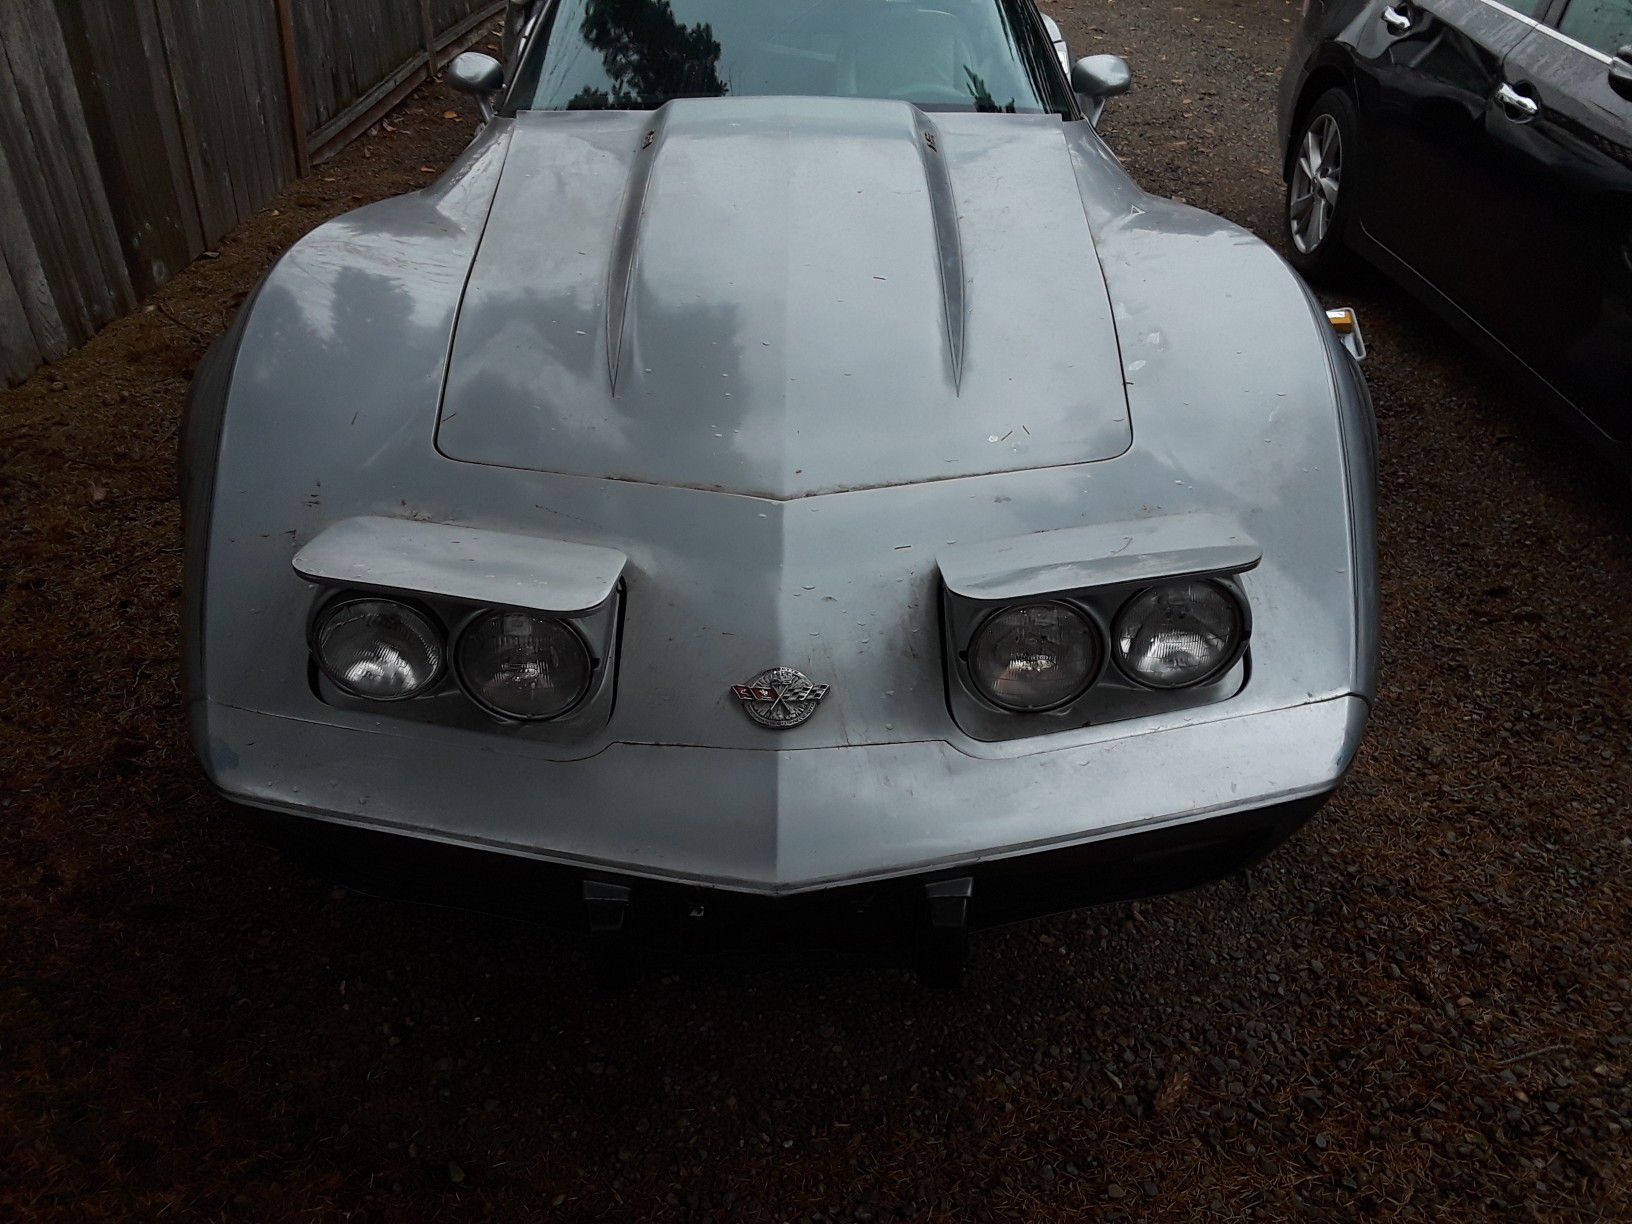 1976 chevrolet corvette trade for v65 1100 magna or kawasaki 900 or the like